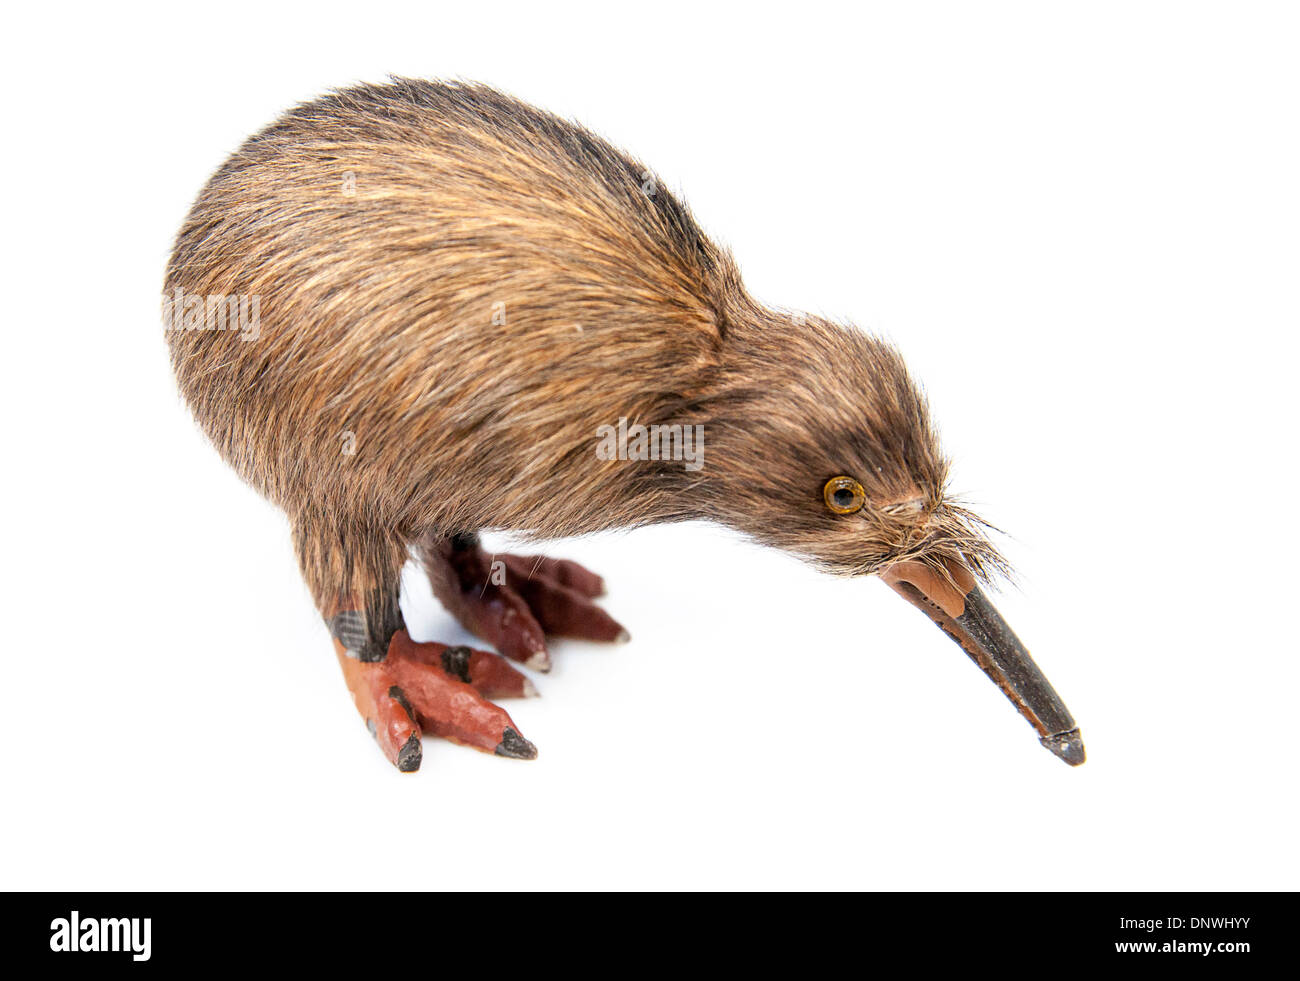 Detail Images Of A Kiwi Bird Nomer 43